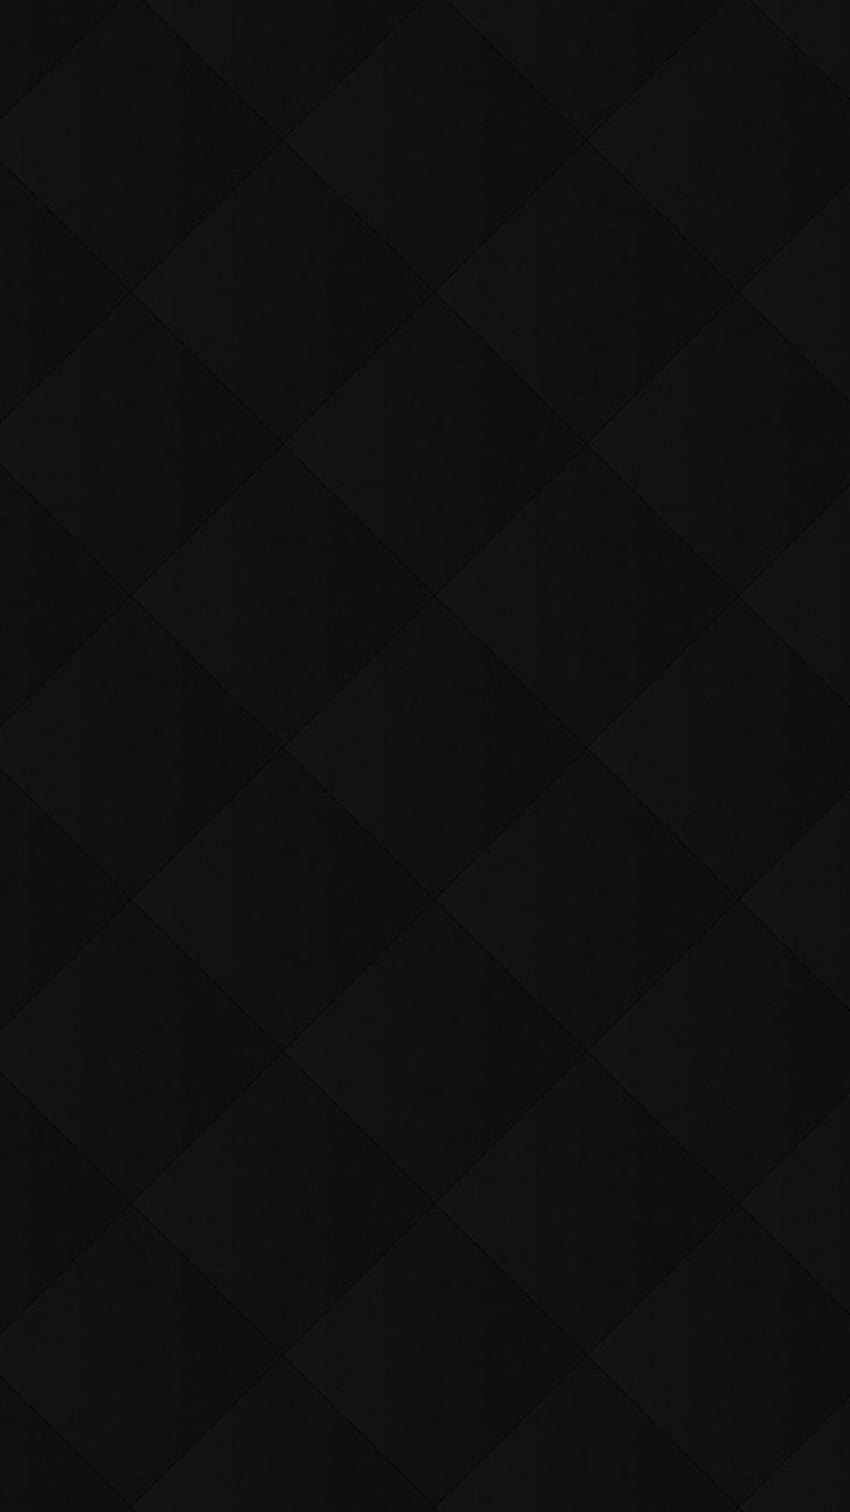 Cuadrados degradados patrón oscuro iPhone 8 ... me gusta, patrón negro fondo de pantalla del teléfono